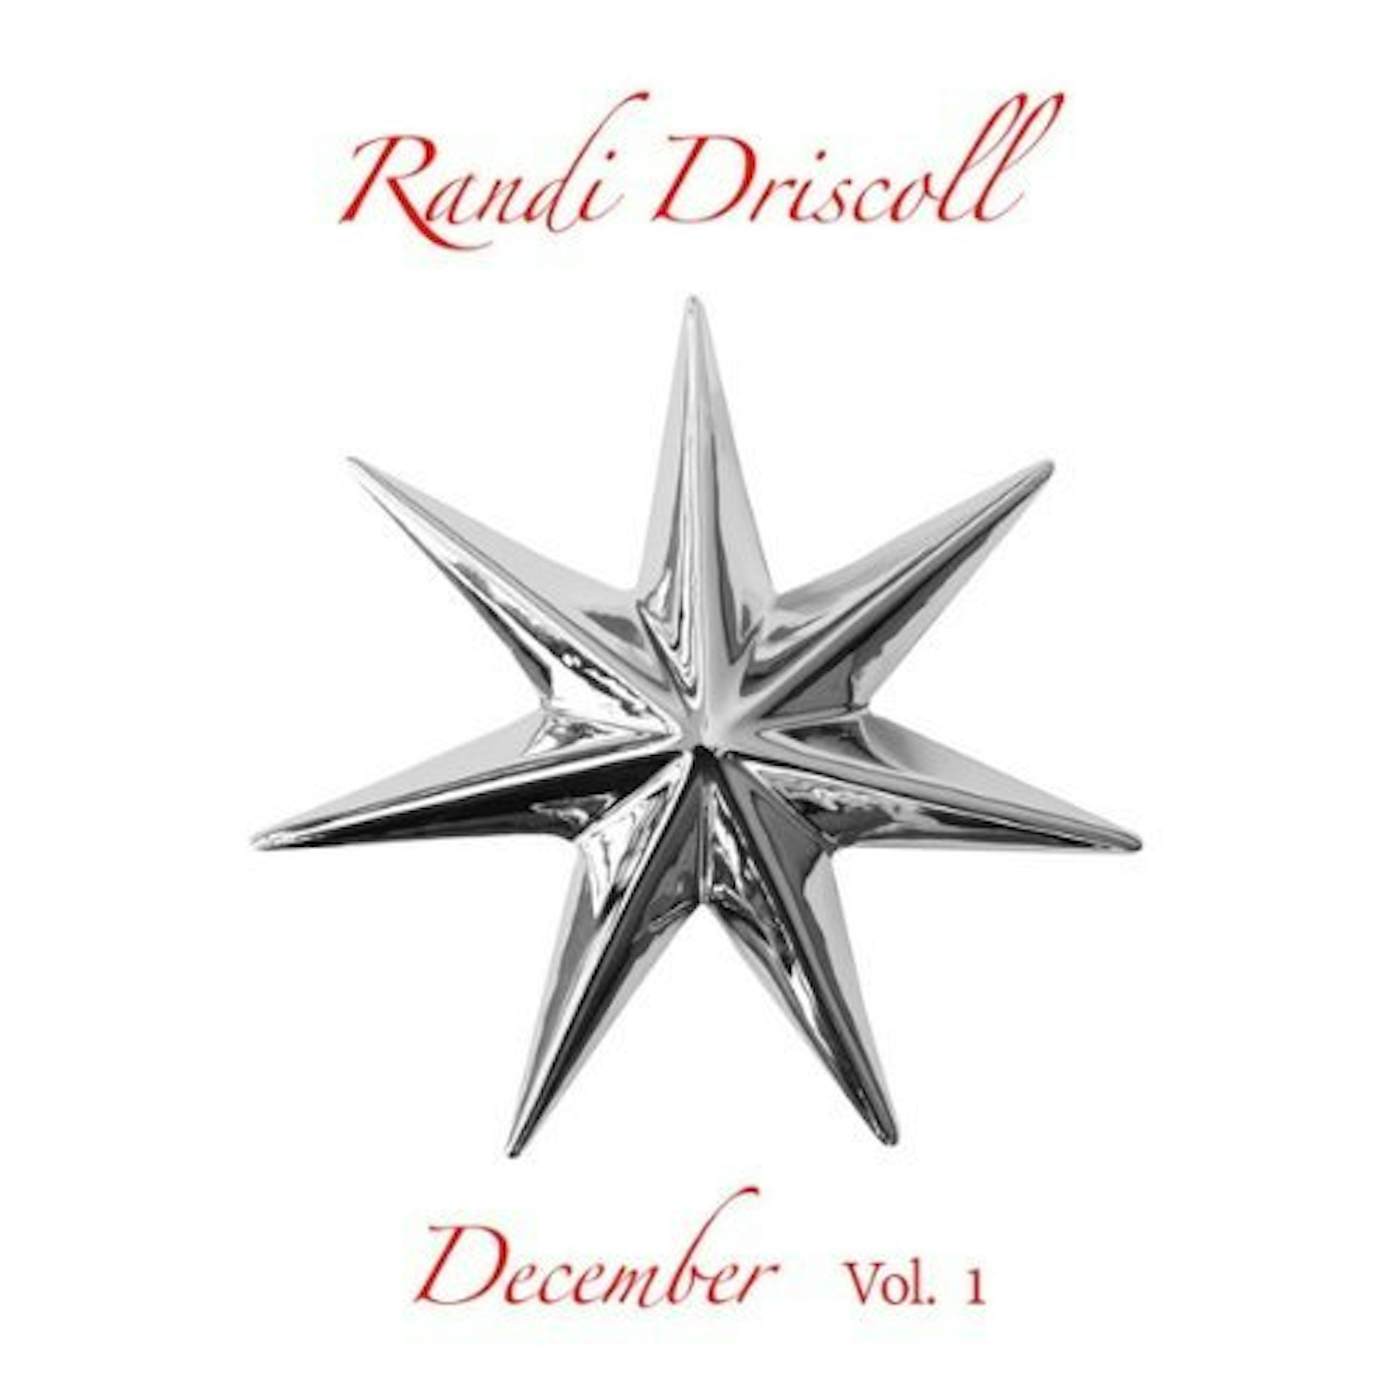 Randi Driscoll DECEMBER VOL. 1 CD